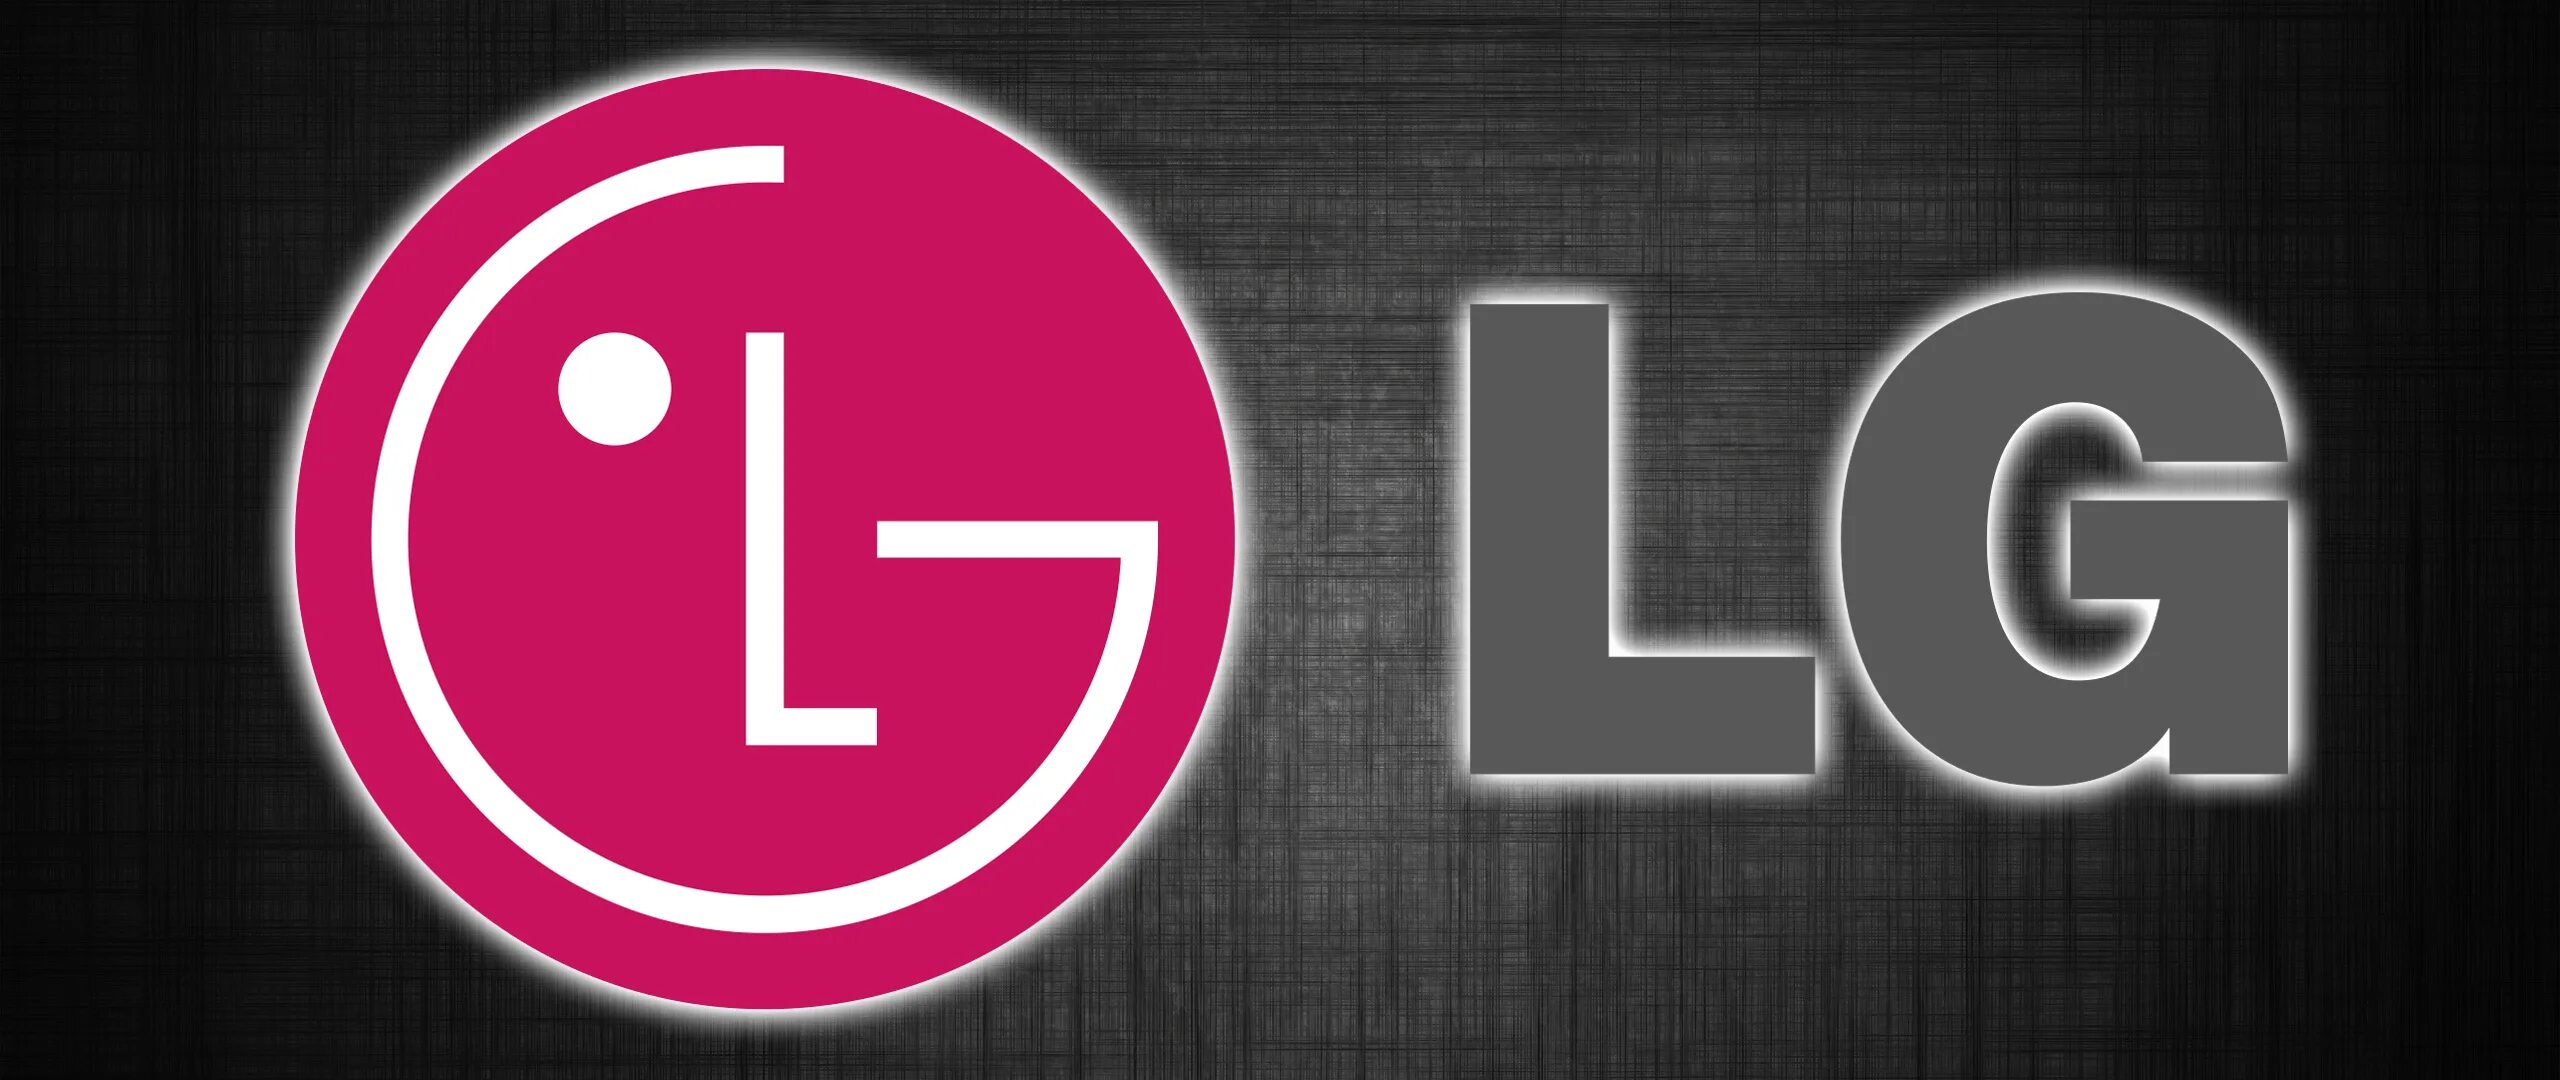 S good ru. LG logo 2014. Первый логотип LG. ТВ В LG логотип. Красивый логотип LG.